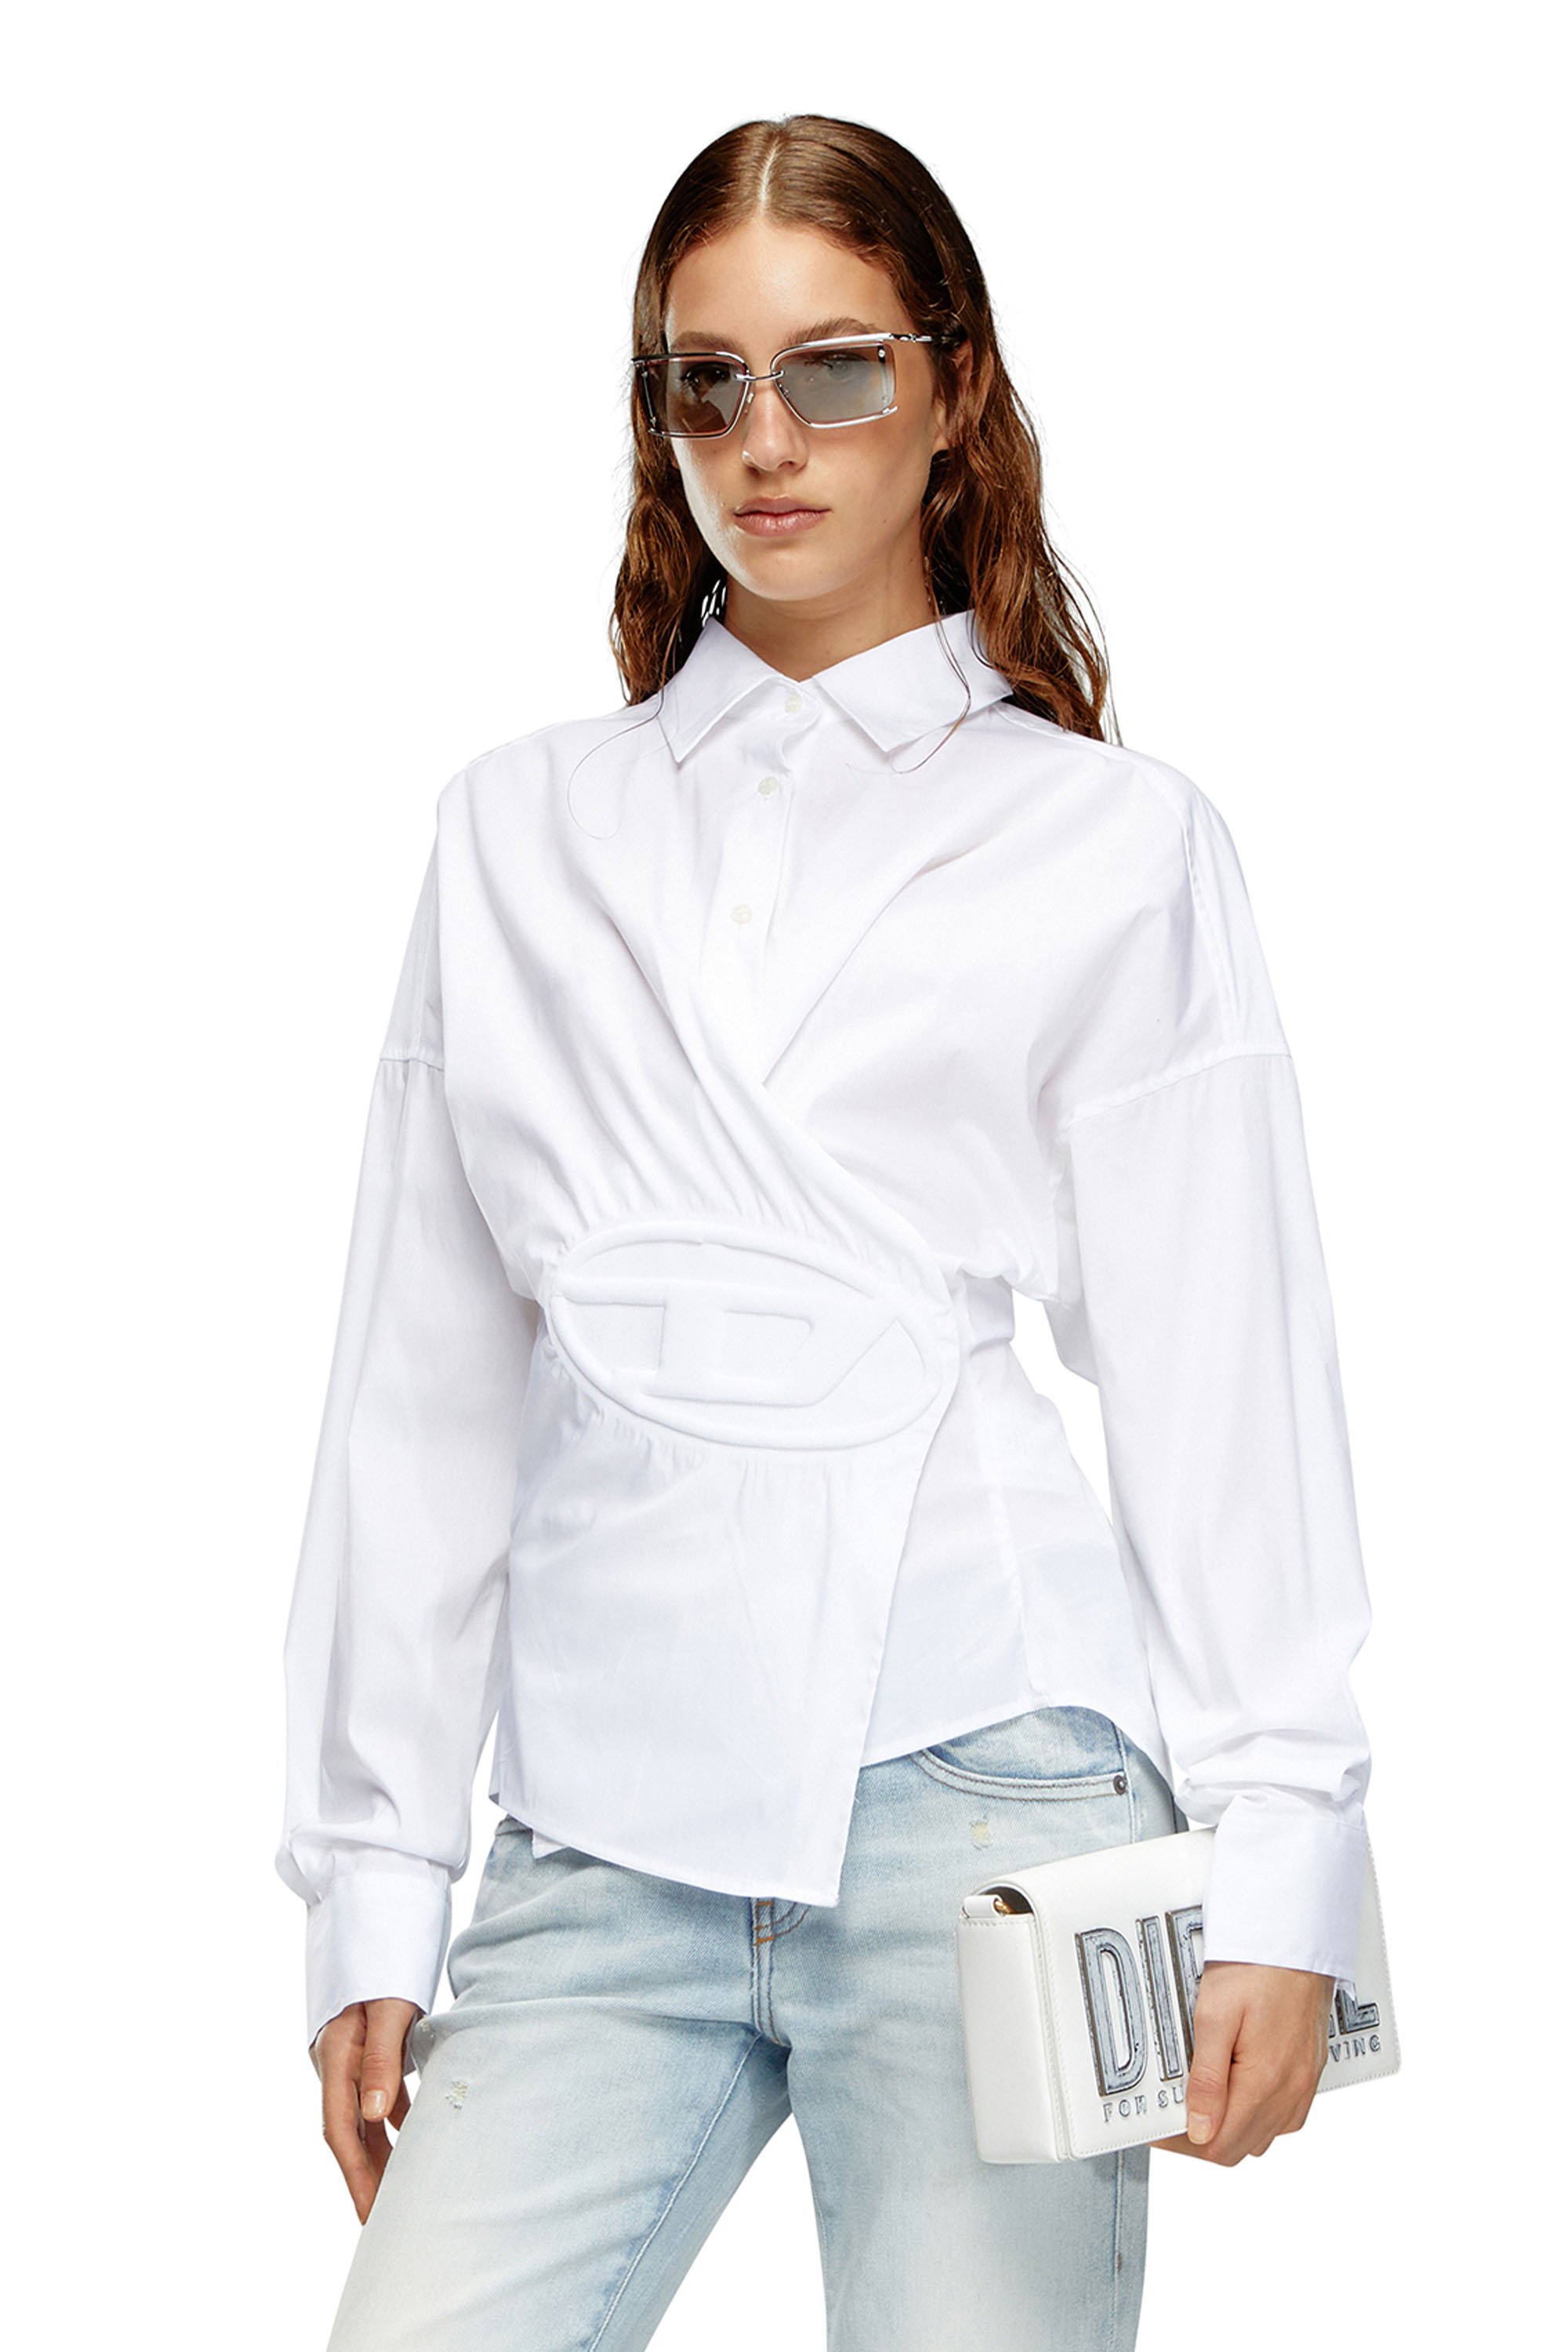 Express Dress Shirt Womenelegant Long Sleeve White Shirt For Women - Slim  Fit Chiffon Dress Shirt